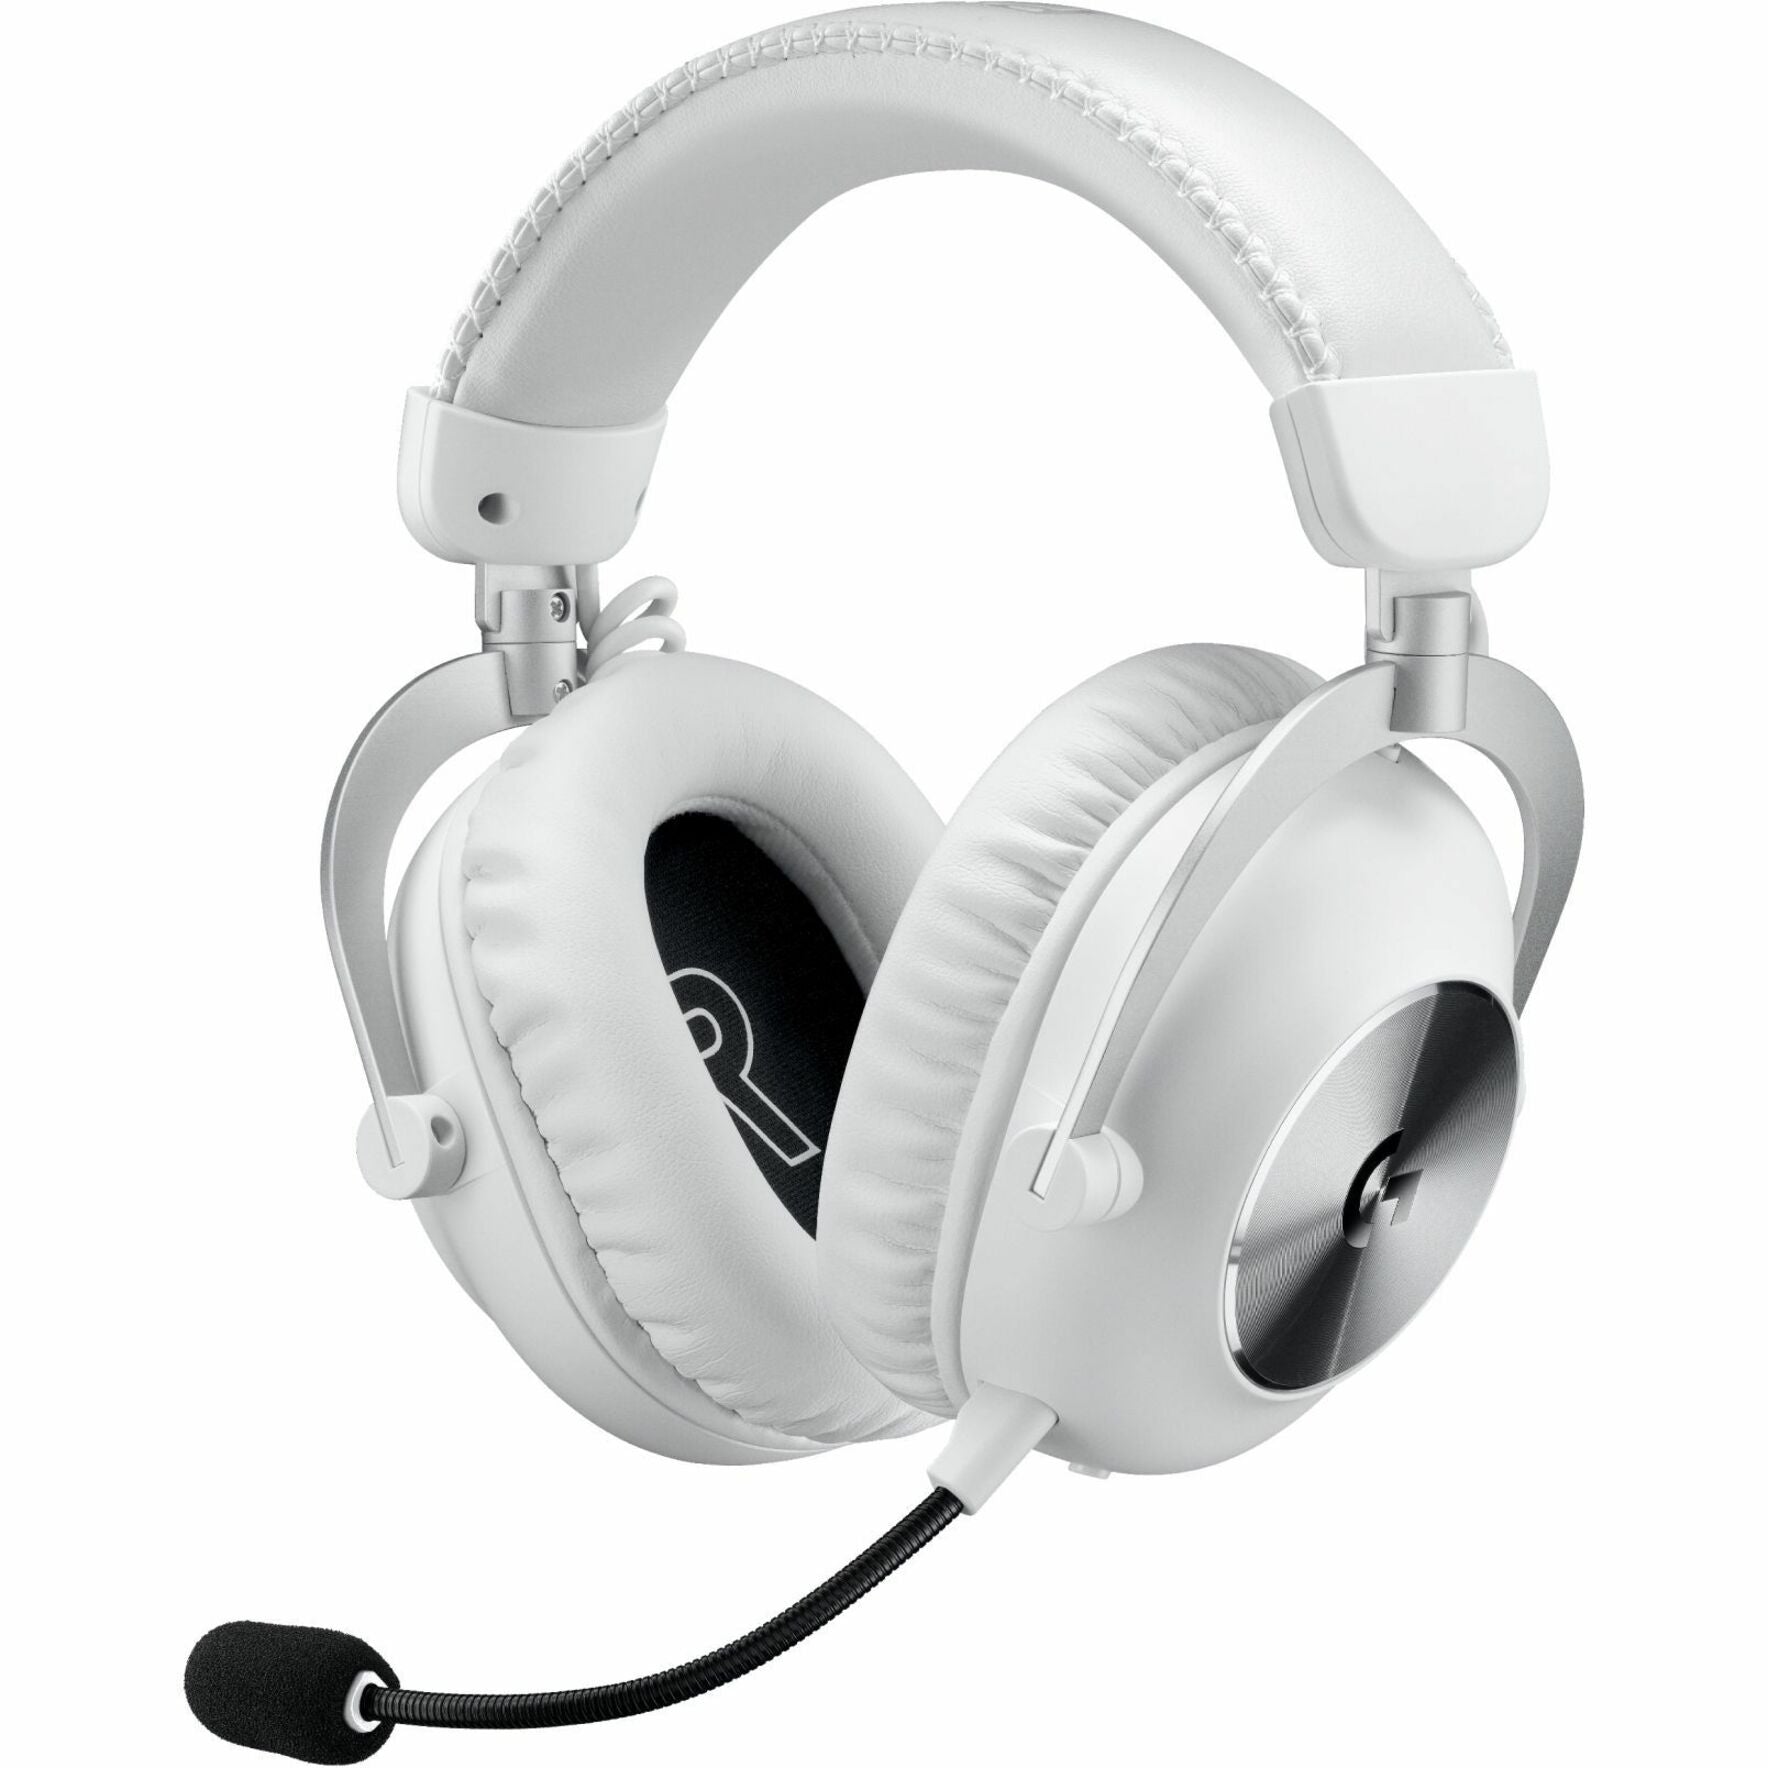 Logitech G935 headset has big sound in same form factor